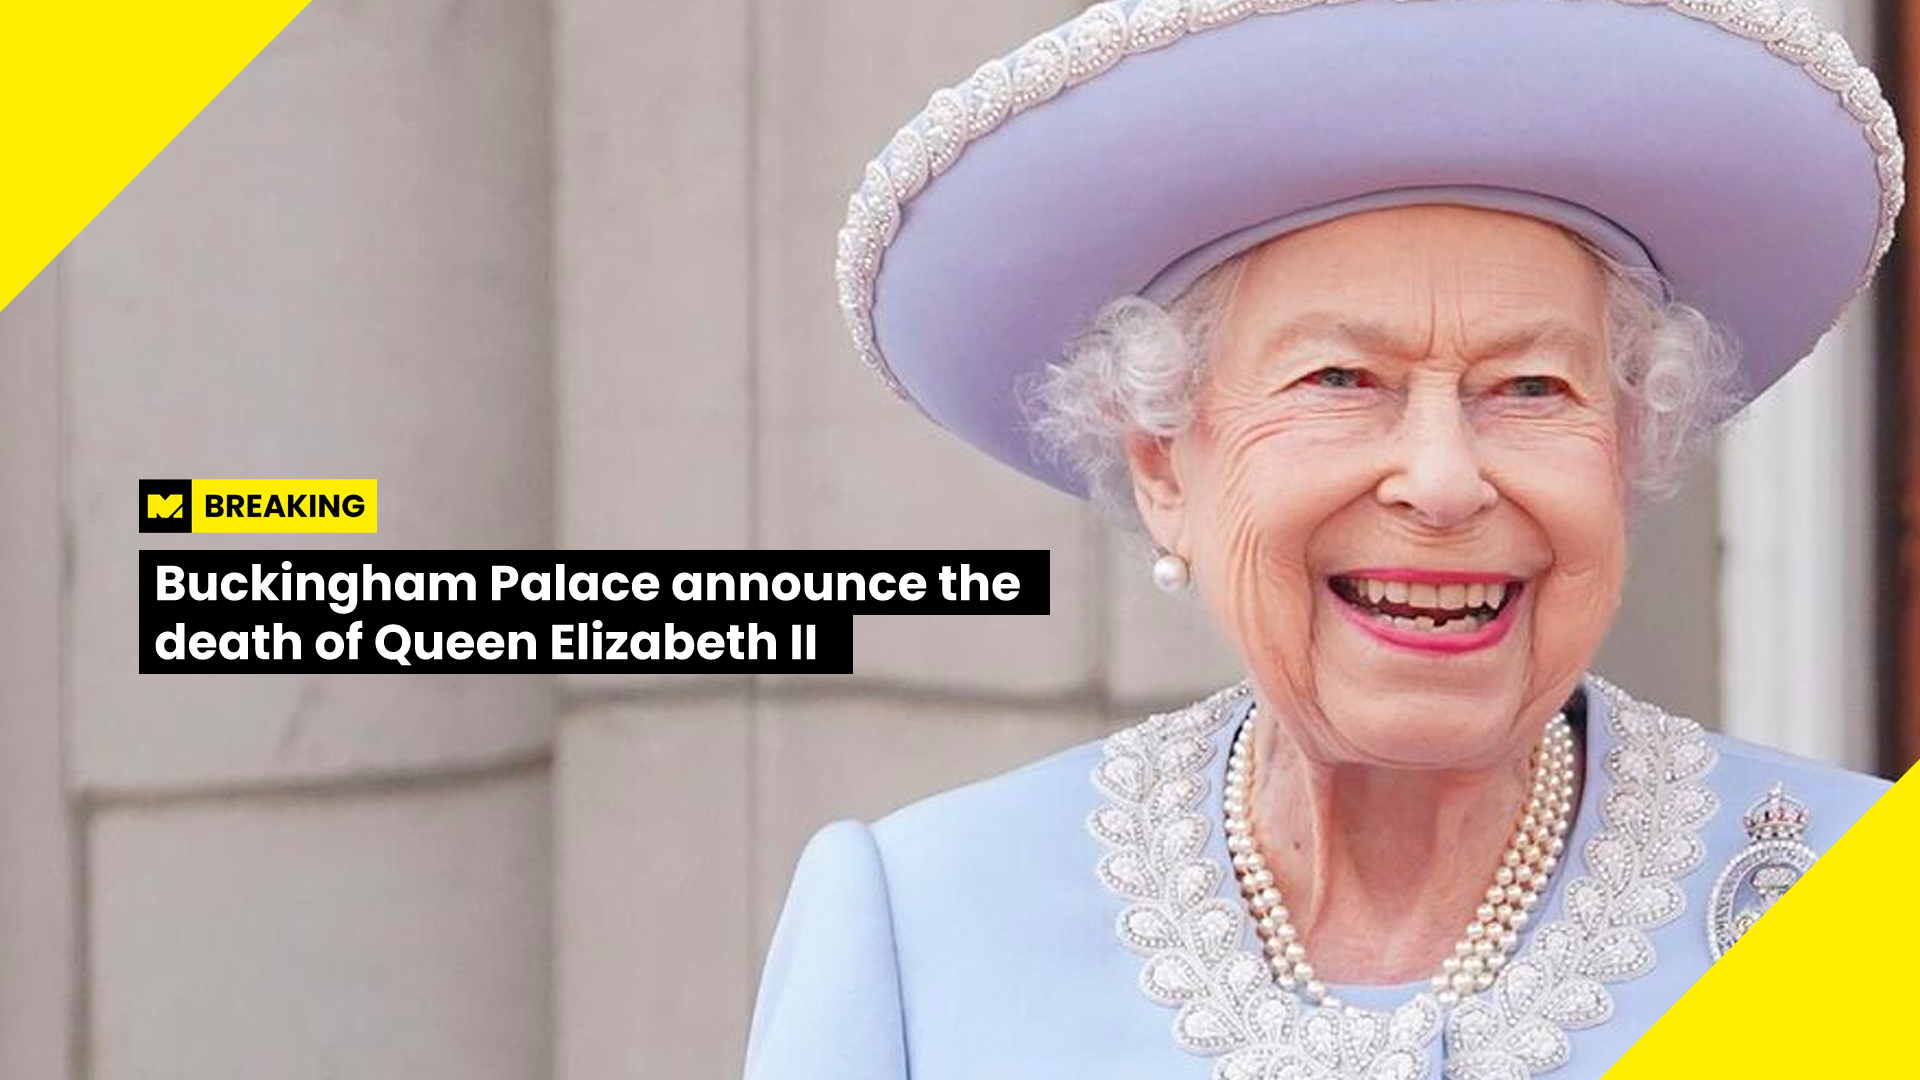 BREAKING: Buckingham Palace announce the death of Queen Elizabeth II